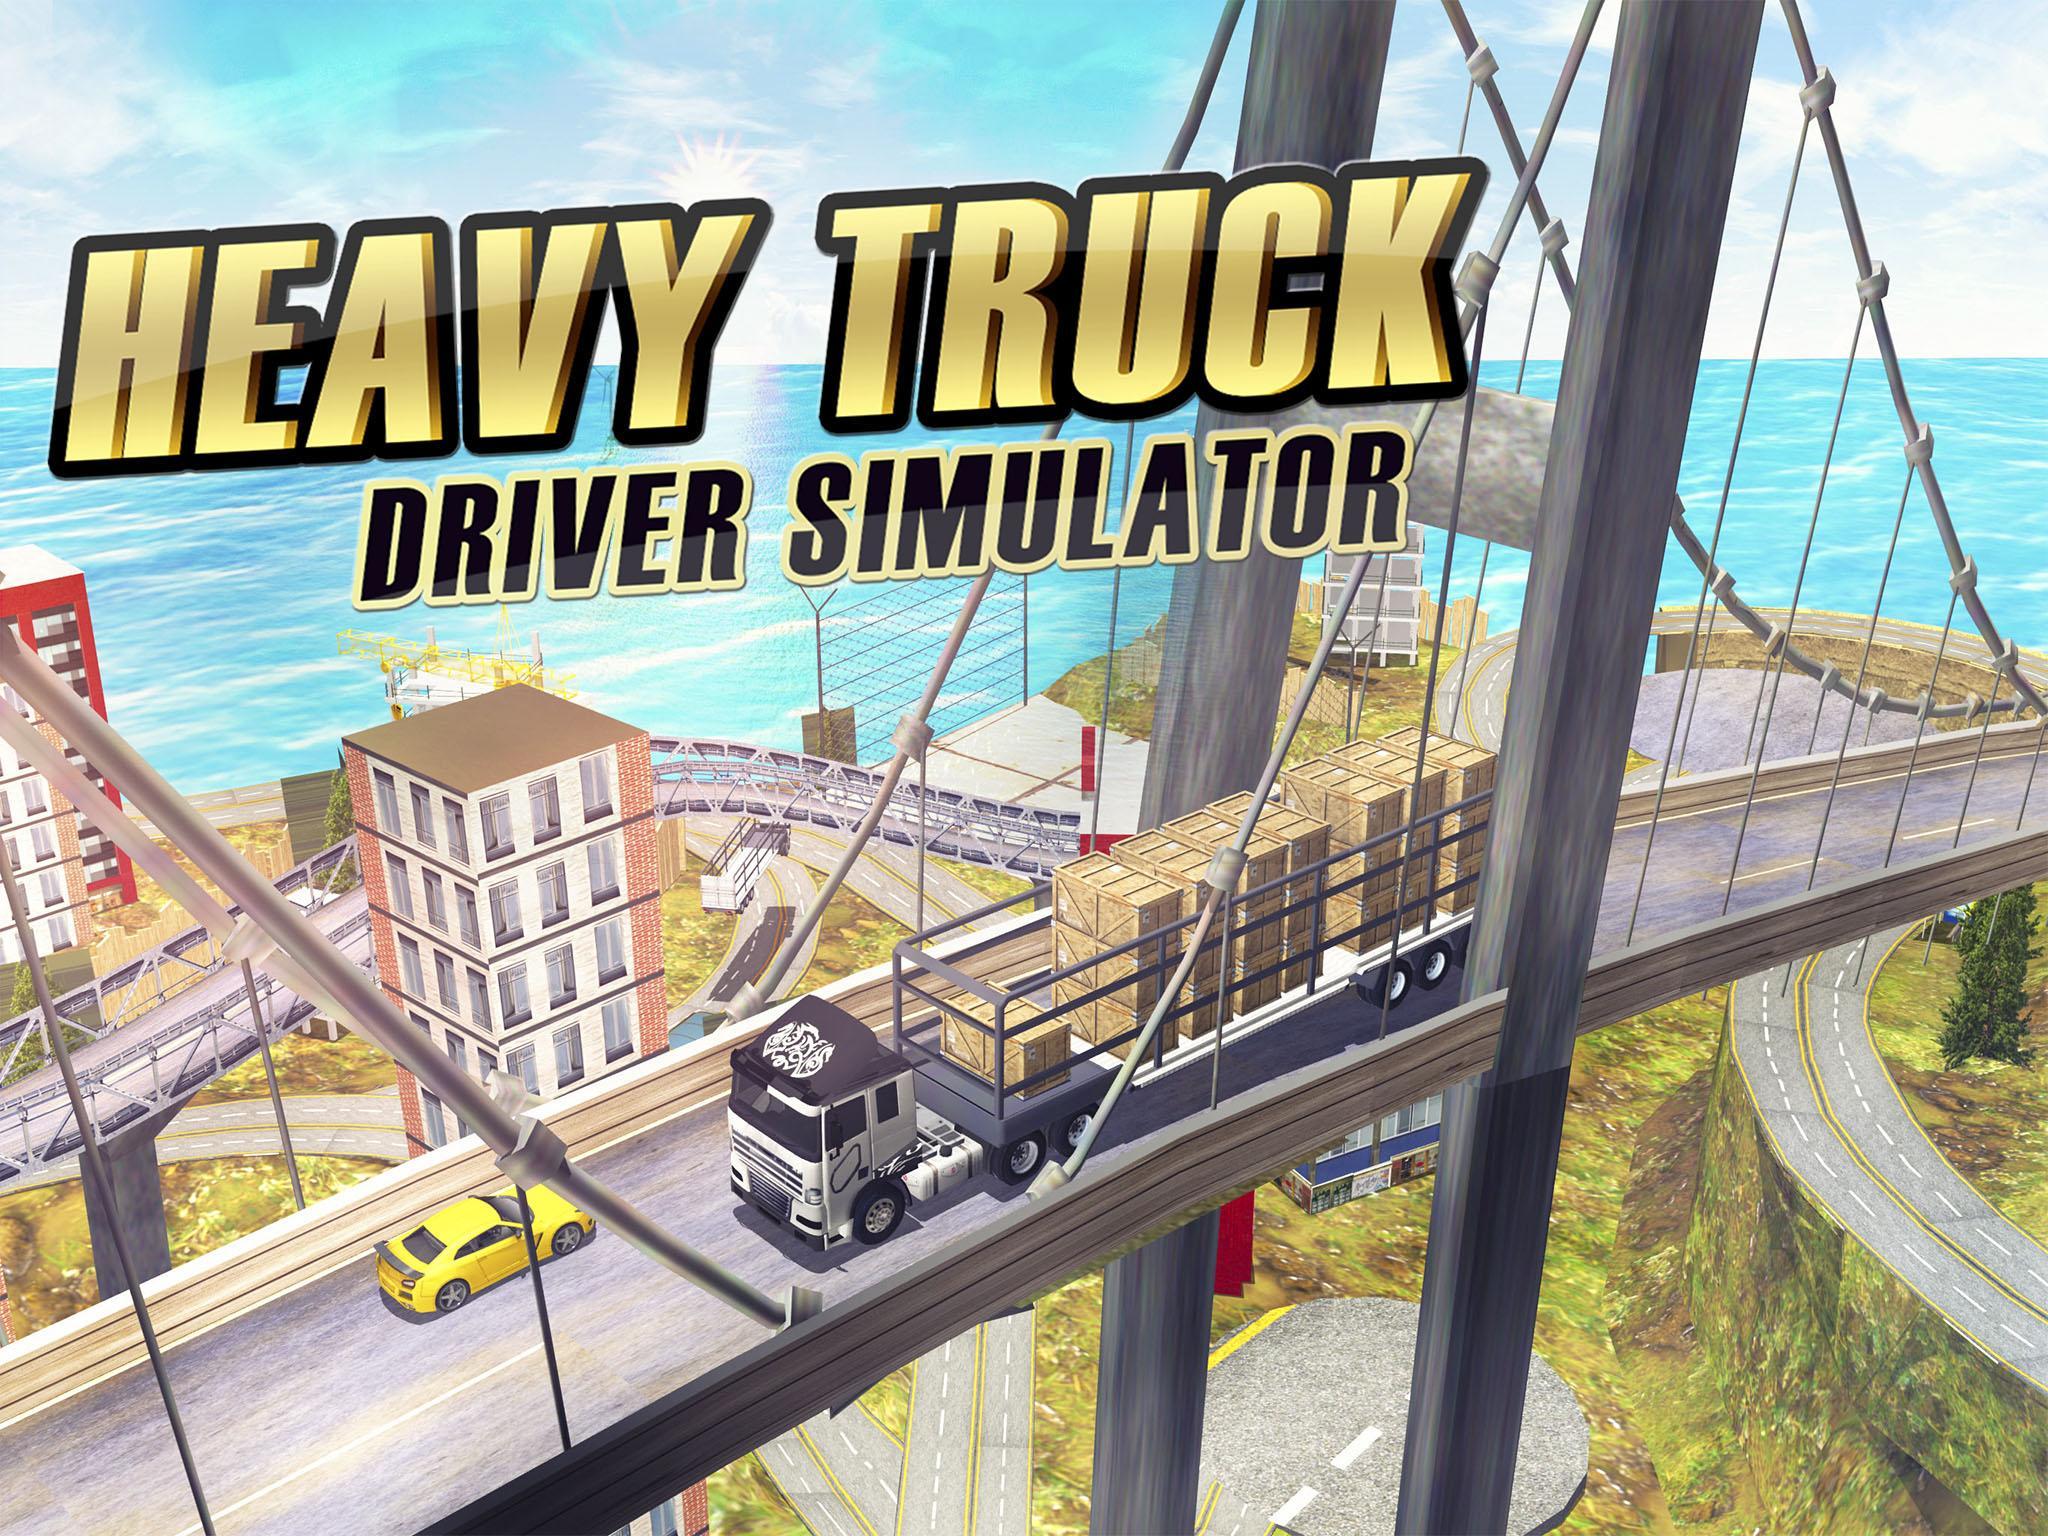 Игра драйвер симулятора. Дривер симулятор. Радио управляемая transport High Simulation City Truck model Heavy Series.